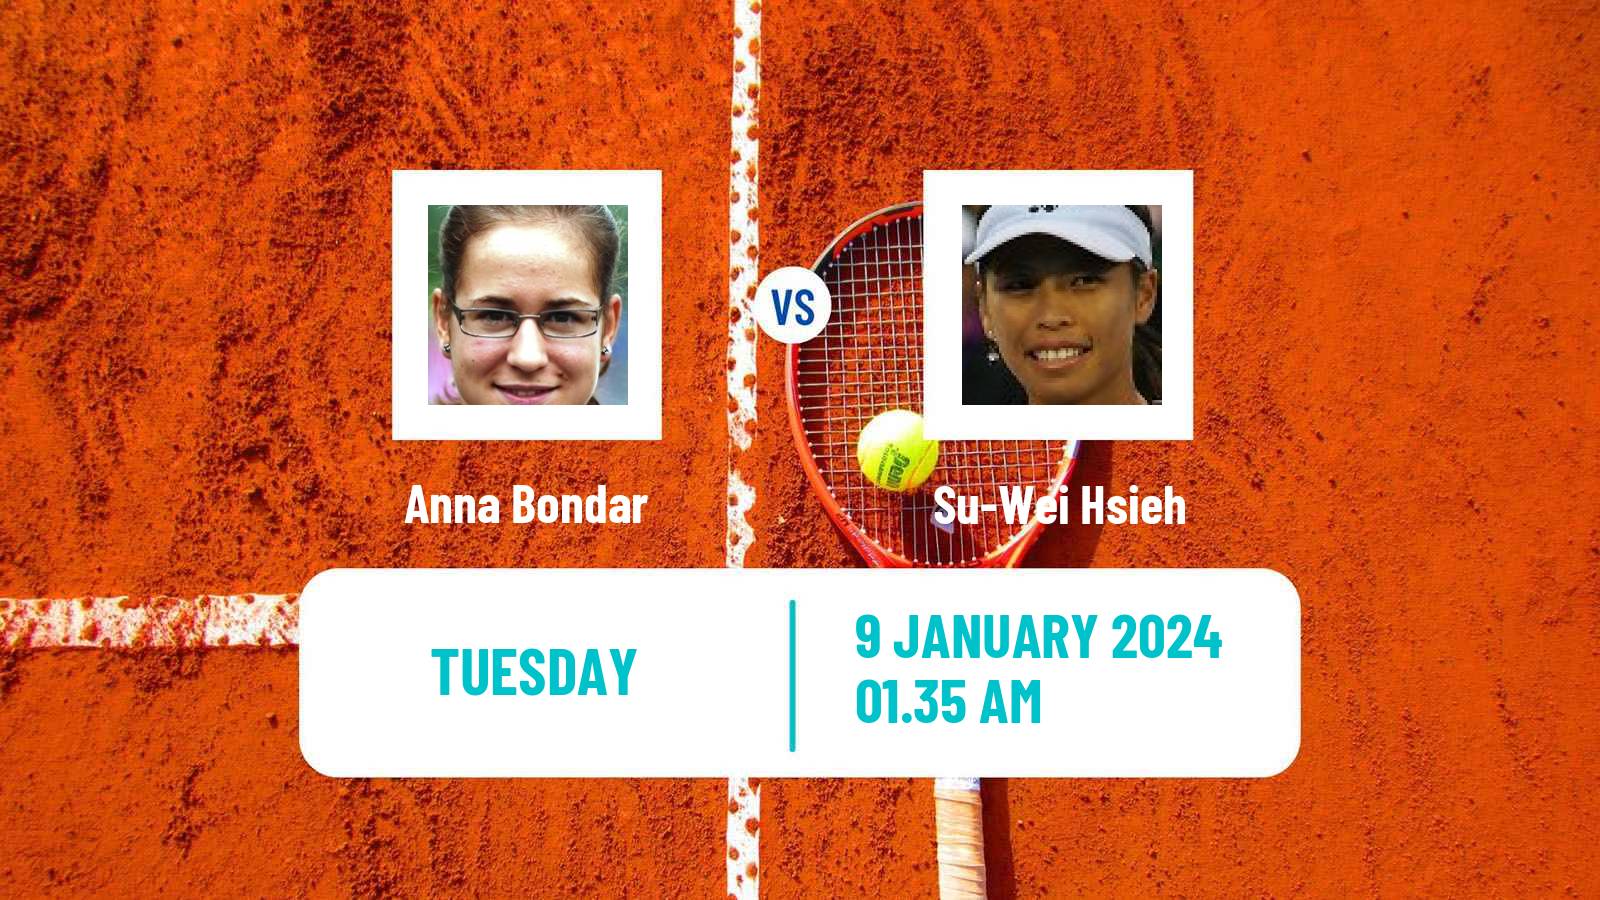 Tennis WTA Australian Open Anna Bondar - Su-Wei Hsieh